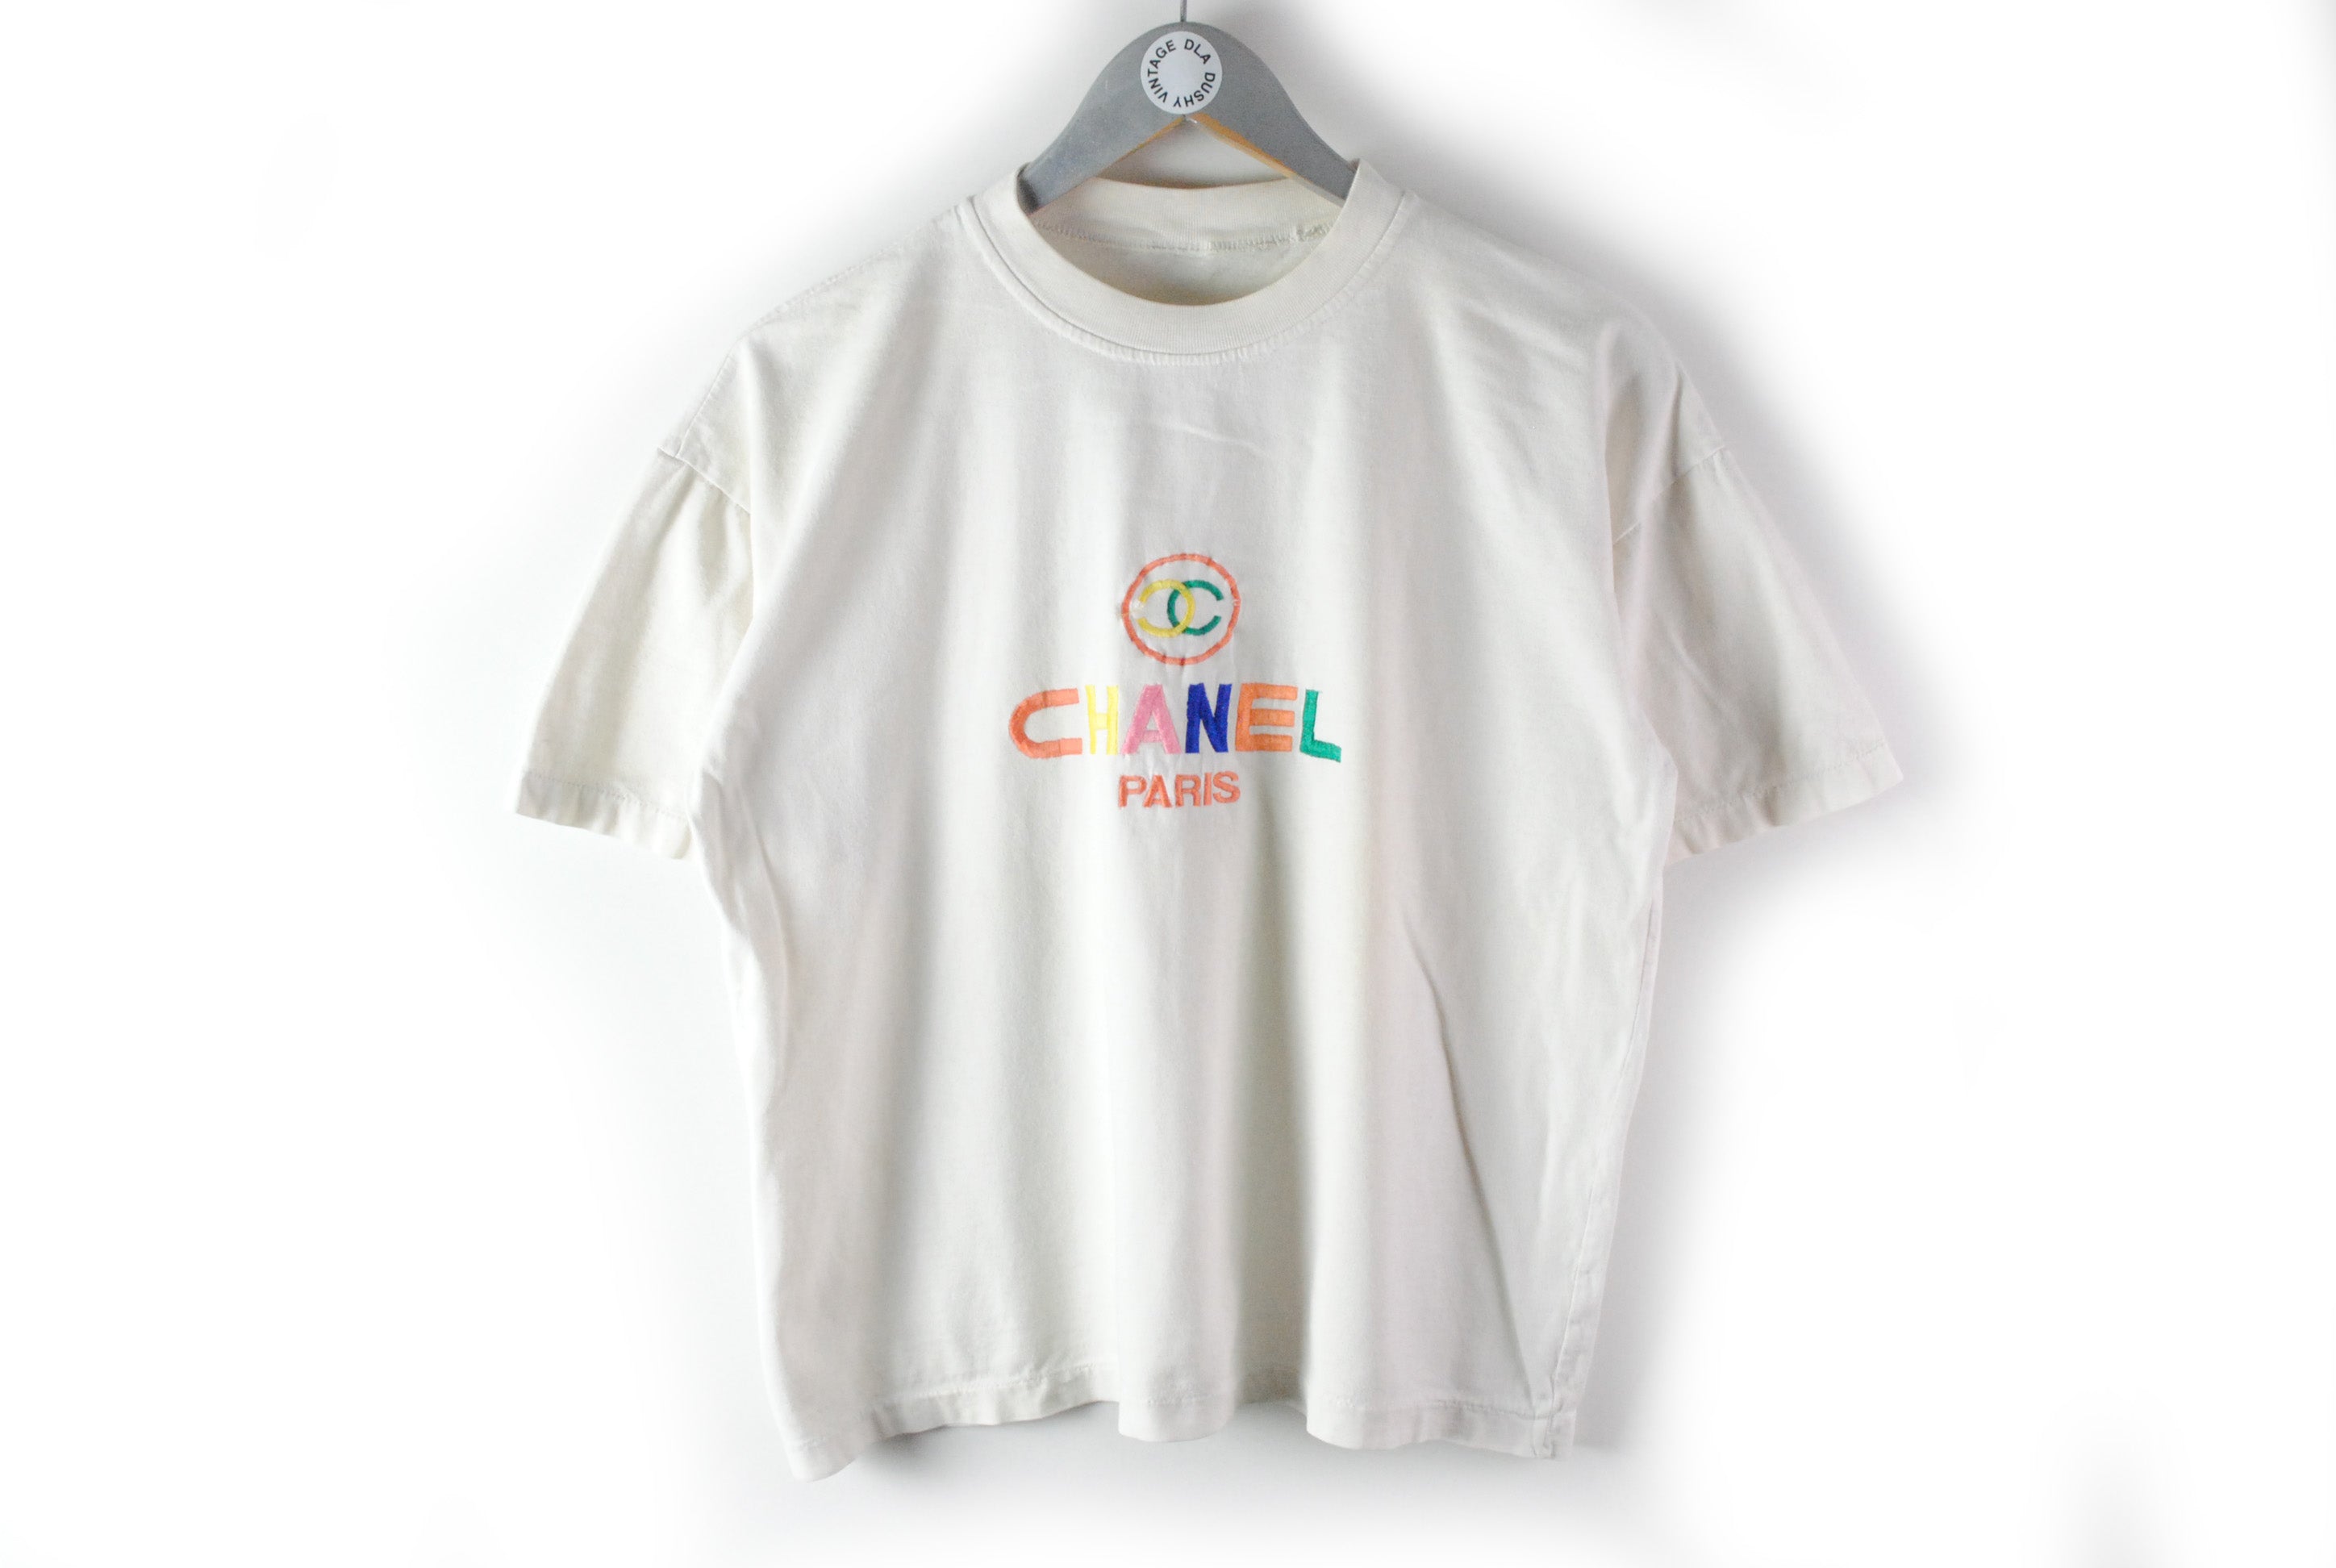 Vintage Chanel Embroidery Logo Bootleg T-Shirt Medium / Large